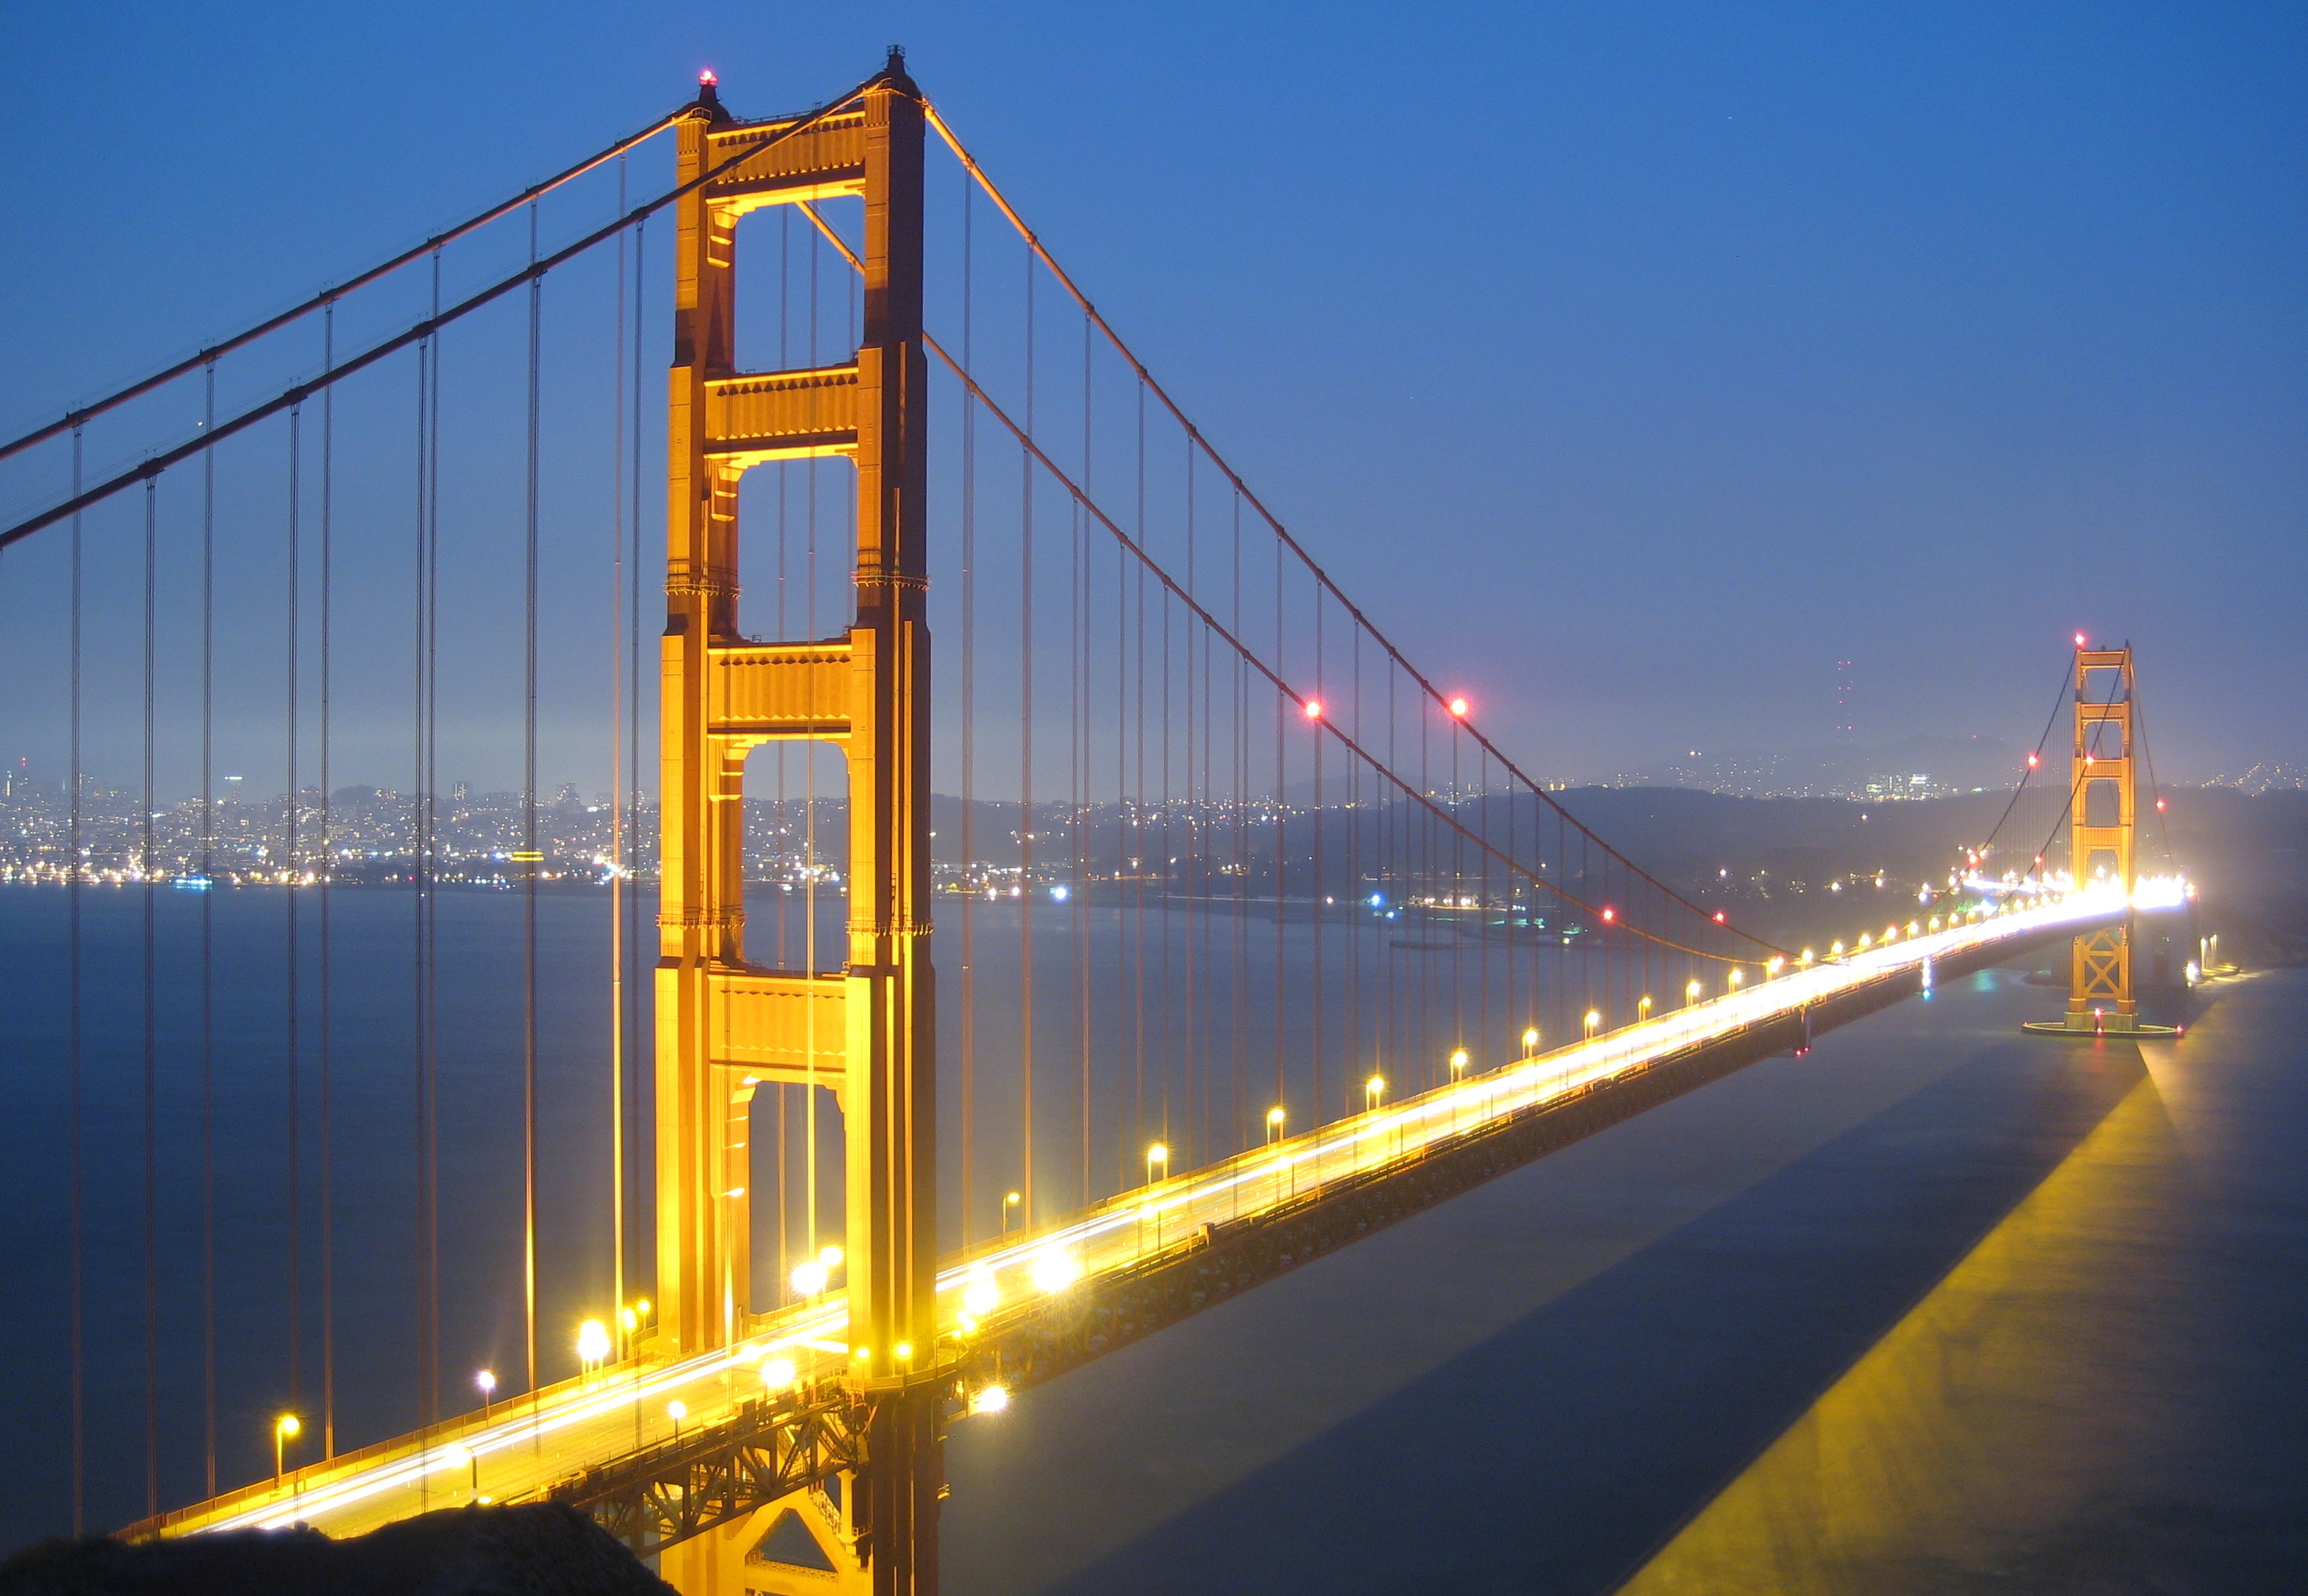 File:Golden Gate Bridge bei Nacht.JPG - Wikimedia Commons